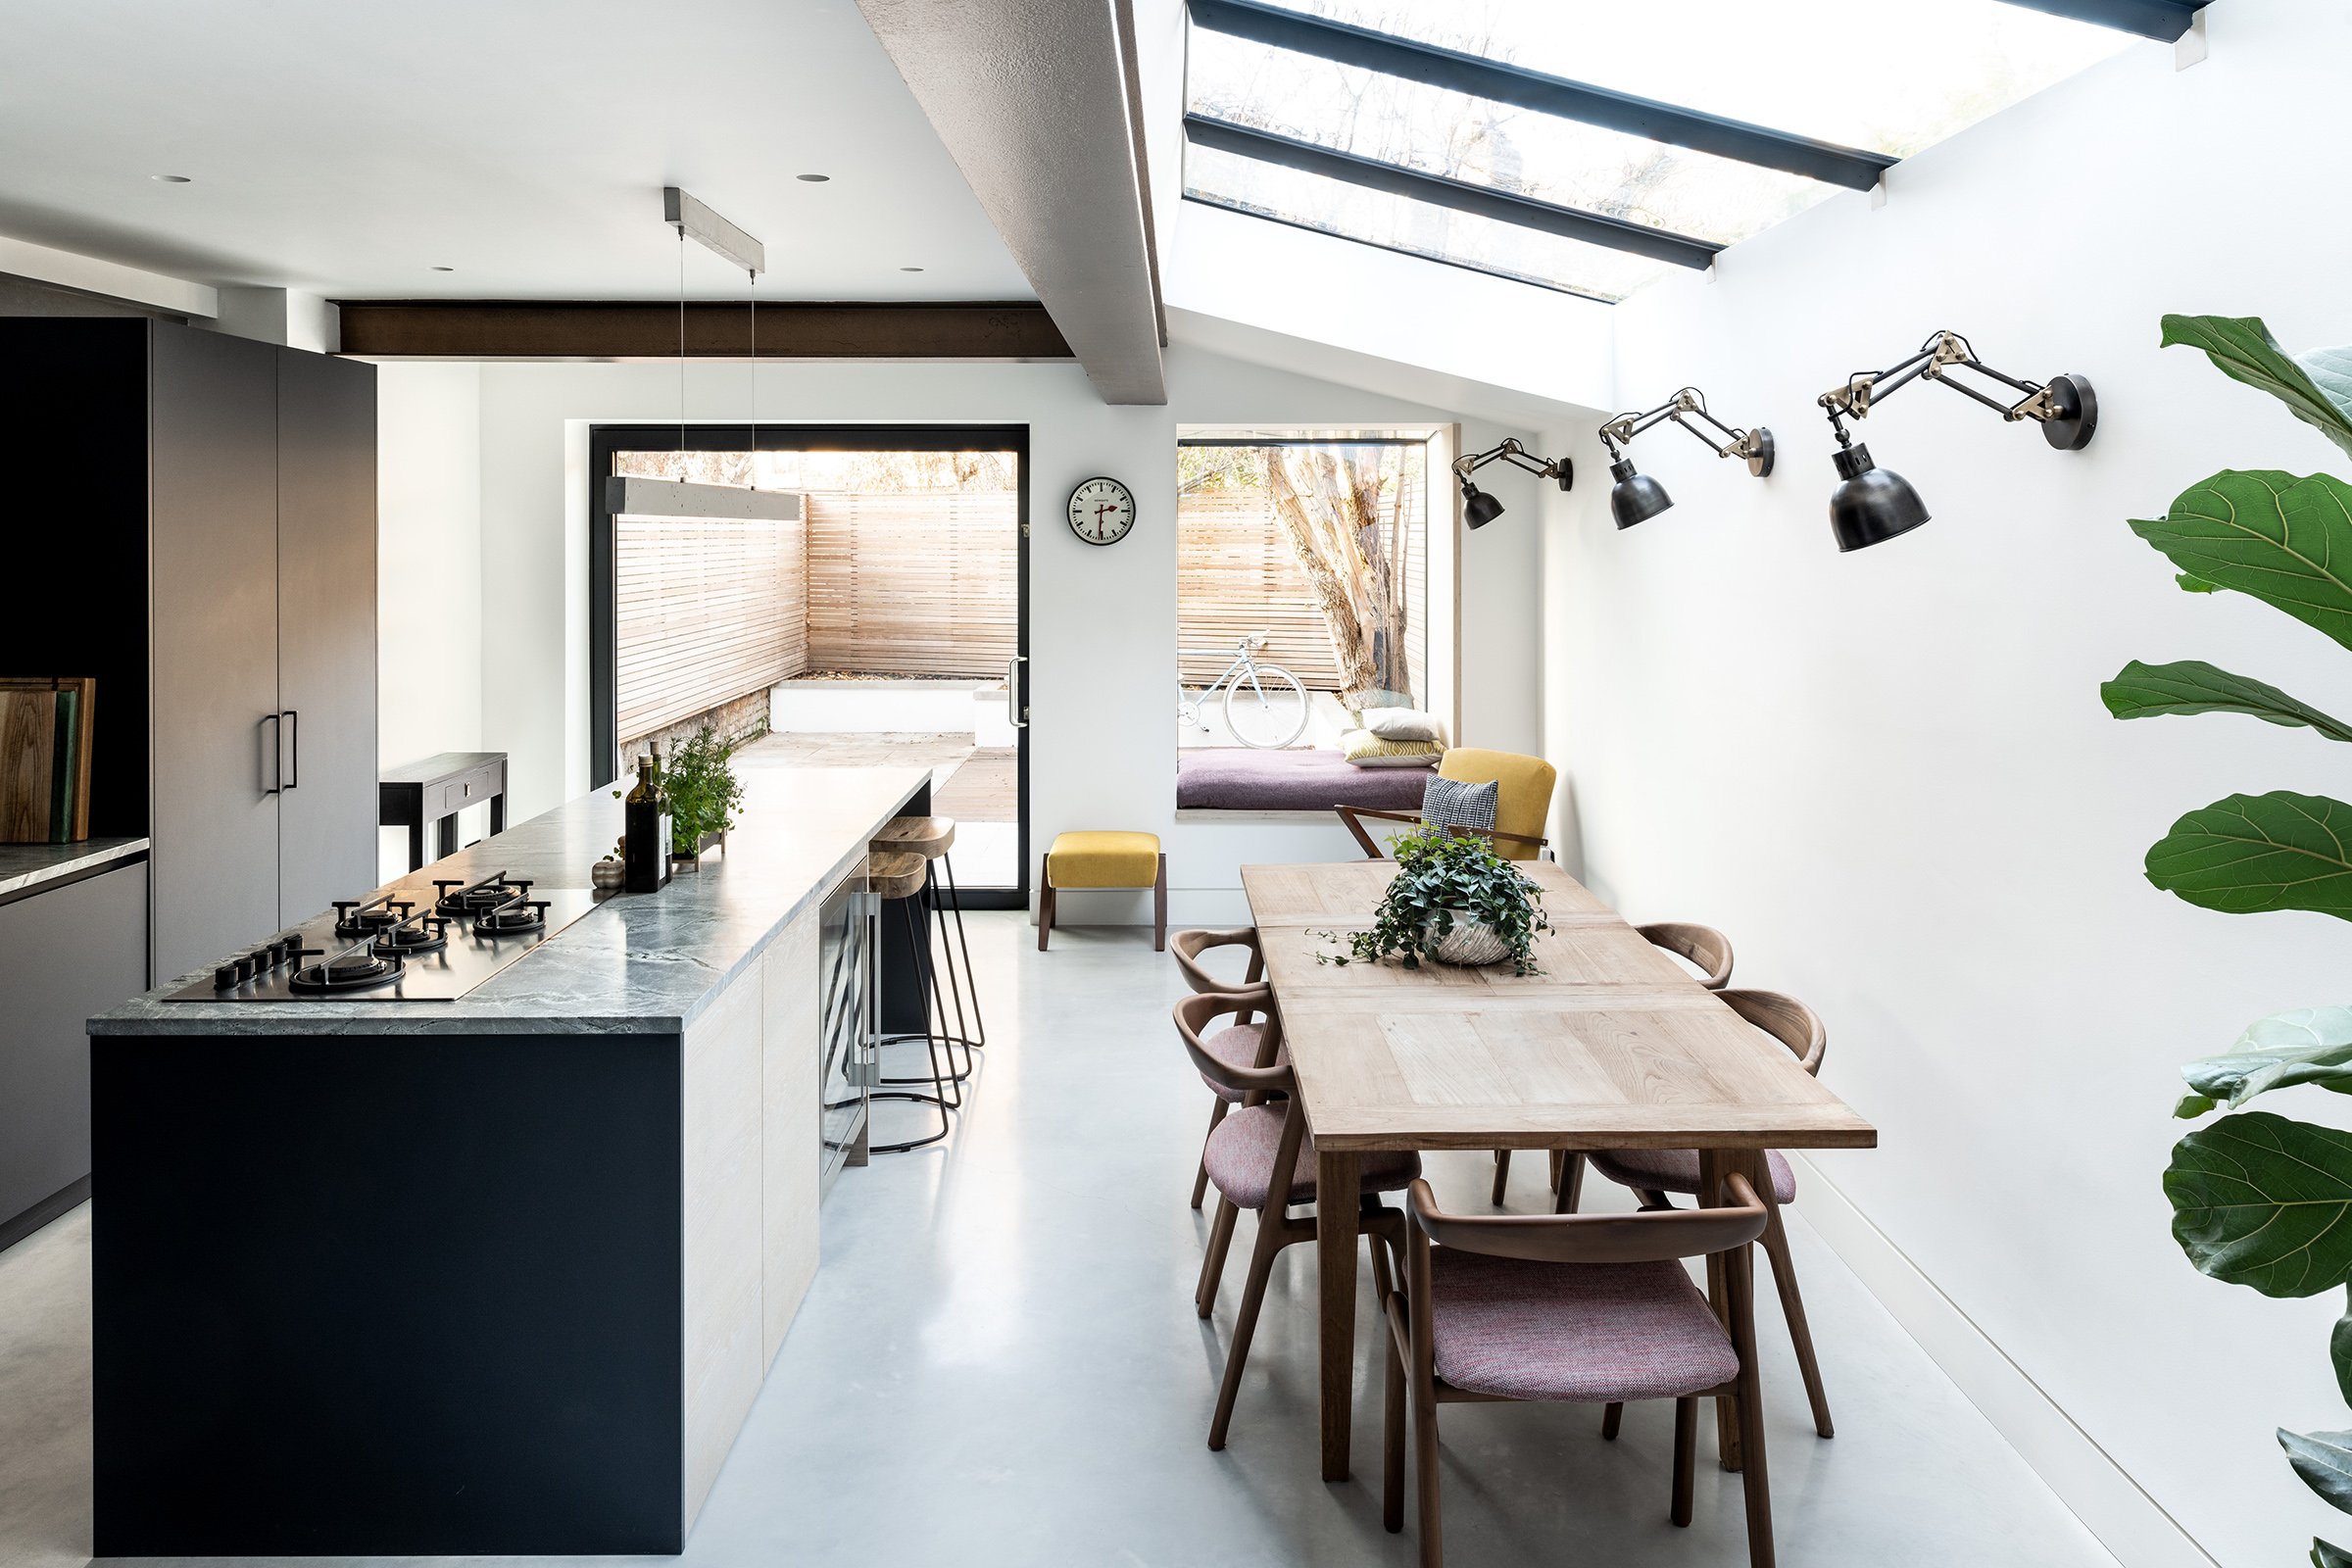 4-mcdowall-road-kitchen-extension-interior-design-architecture-london-uk-rider-stirland-architects.jpg